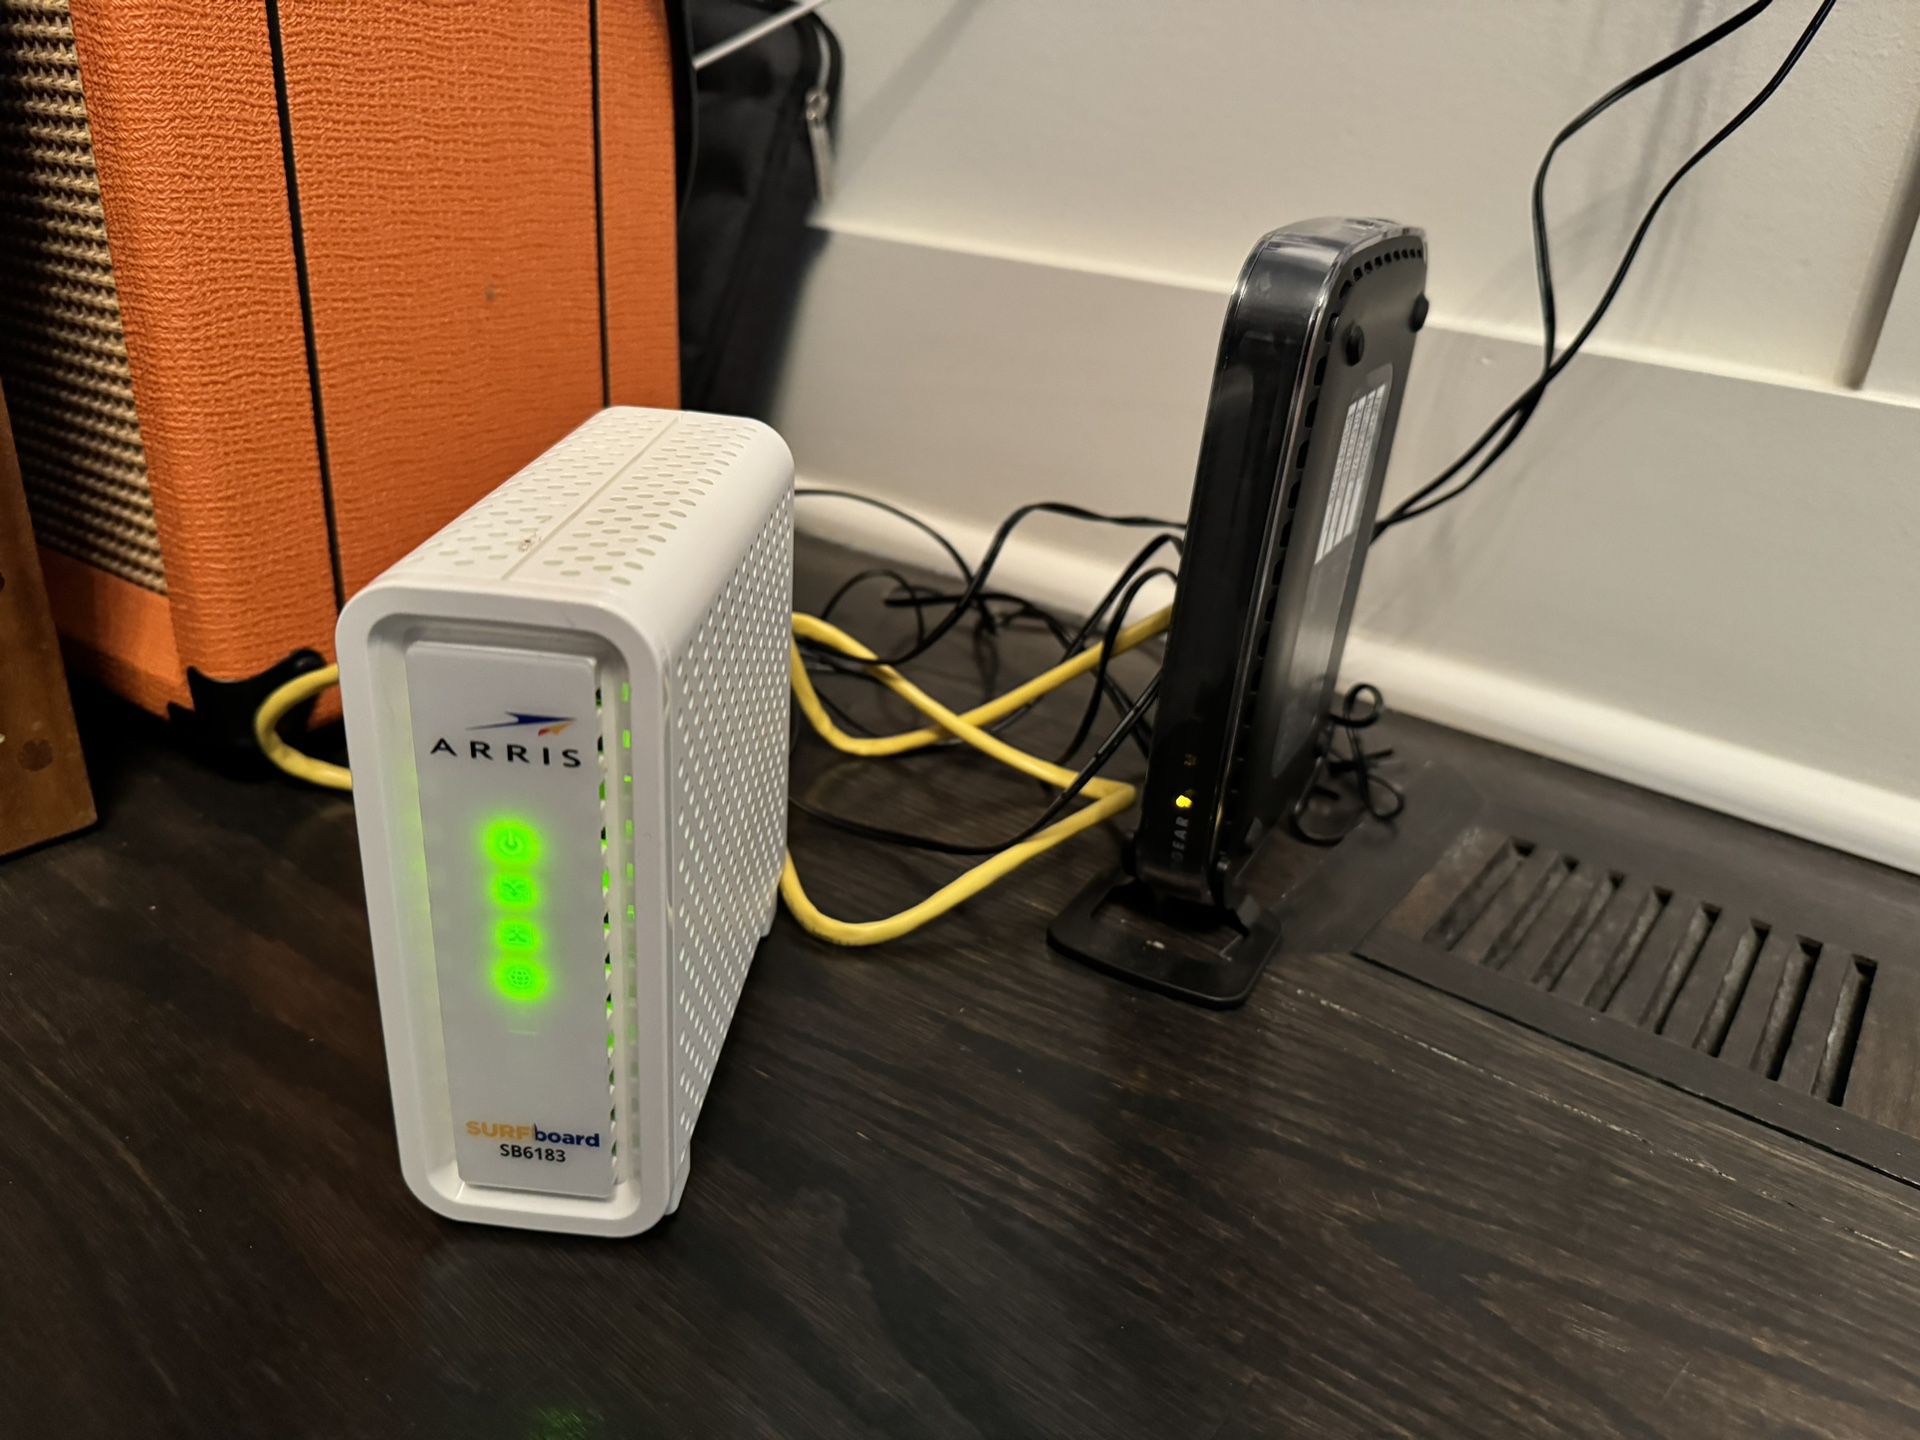 Arris modem and netgear Router Combo